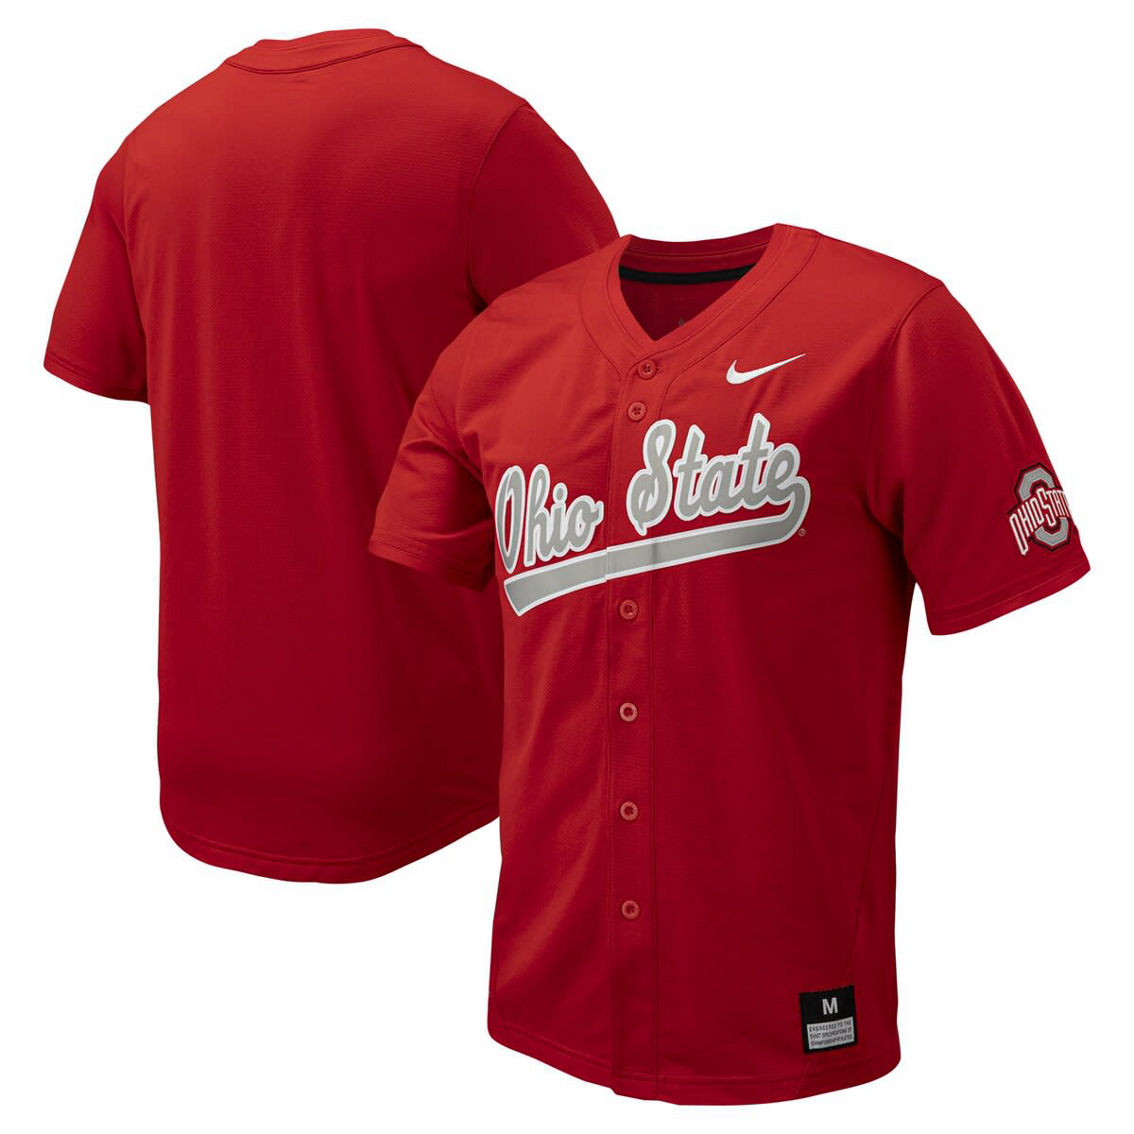 Nike Men's Scarlet Ohio State Buckeyes Replica Full-Button Baseball Jersey - Image 2 of 4